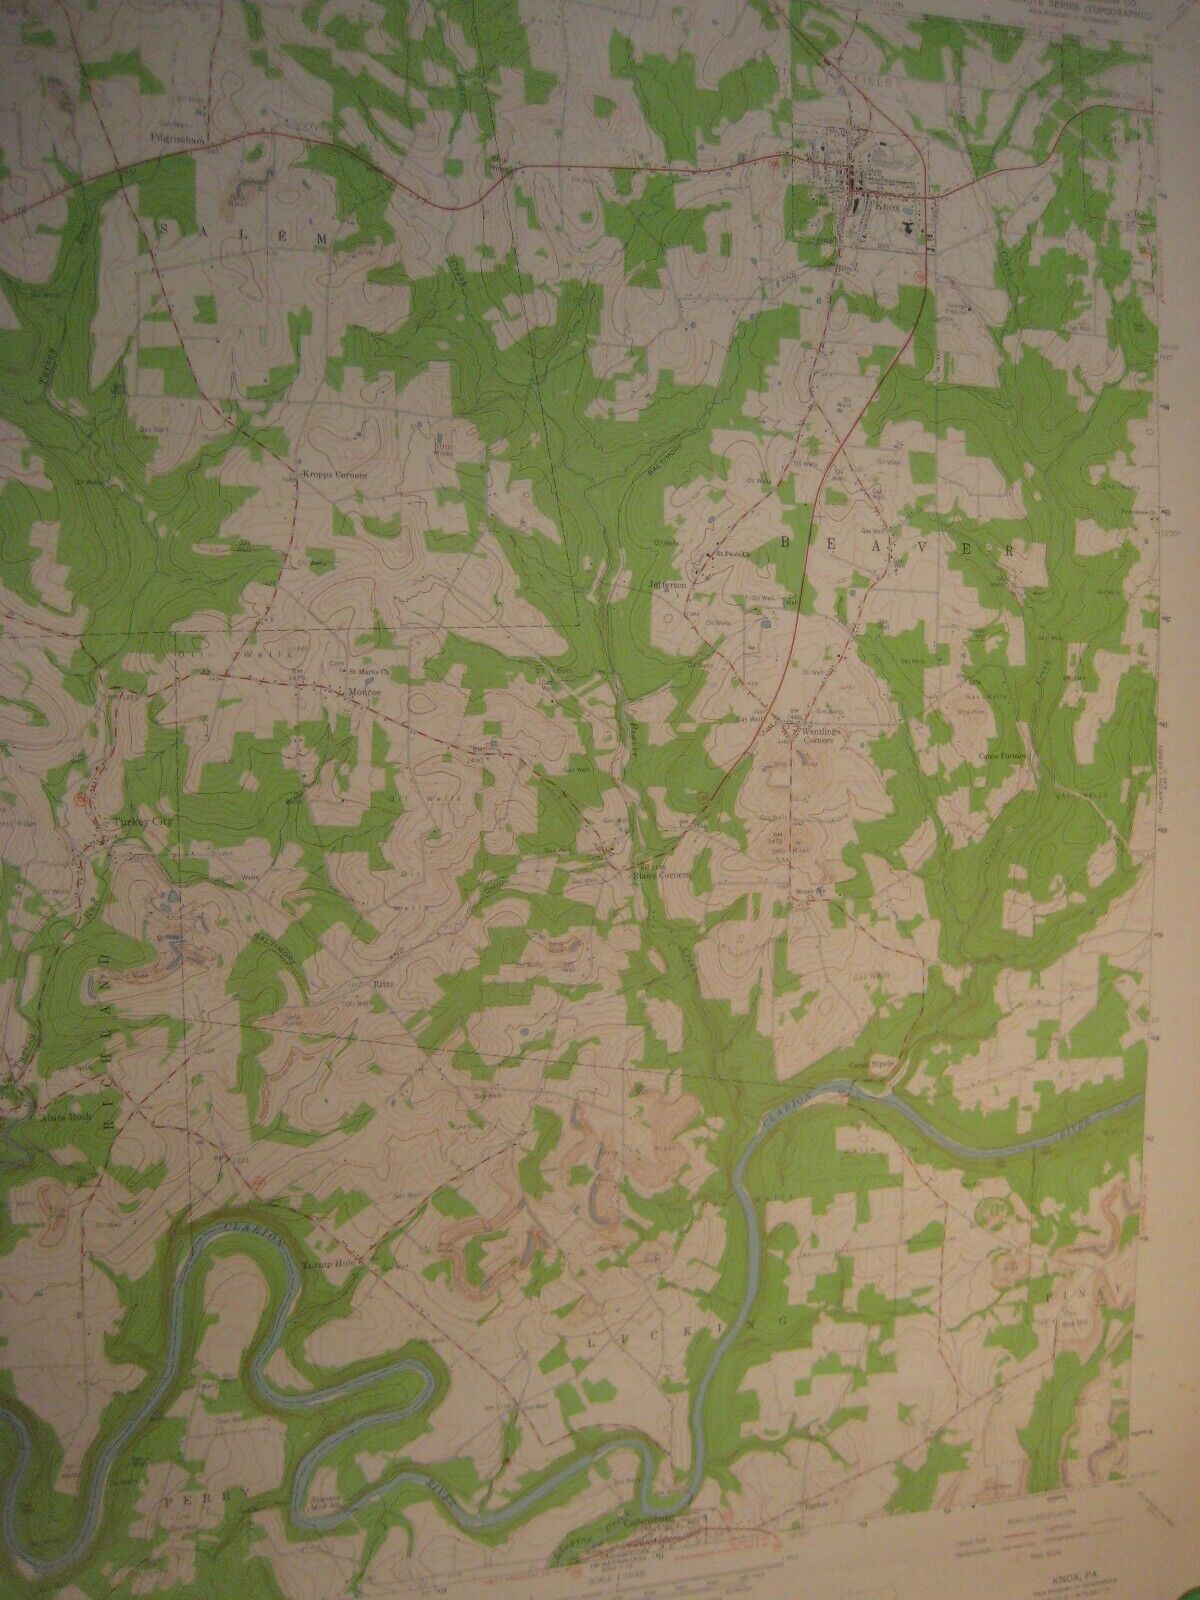 Knox in Clarion County Pennsylvania 1963 Quadrangle USGS 7.5' Topographic Map